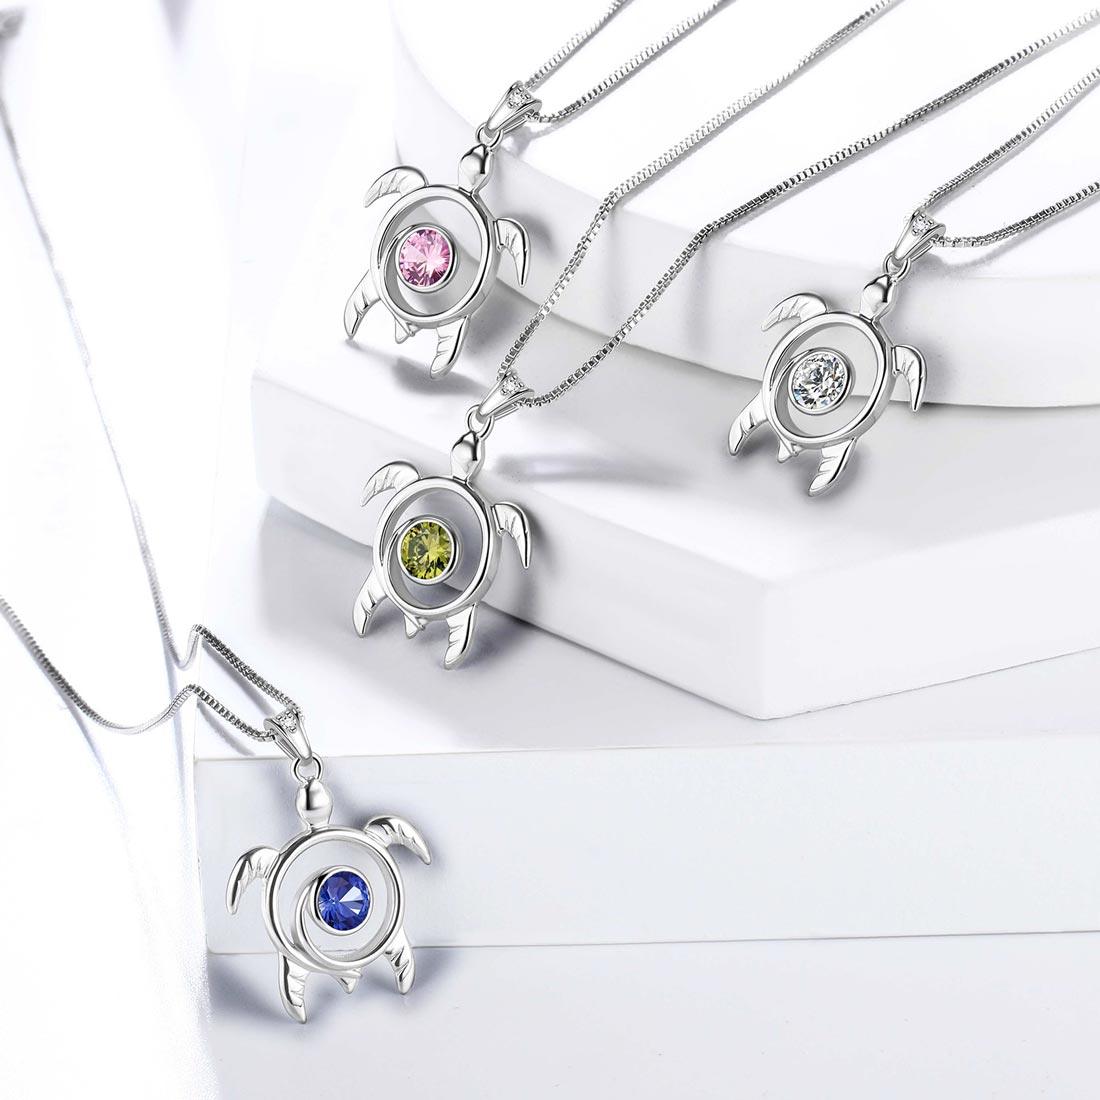 Turtle Birthstone April Diamond Necklace Pendant - Necklaces - Aurora Tears